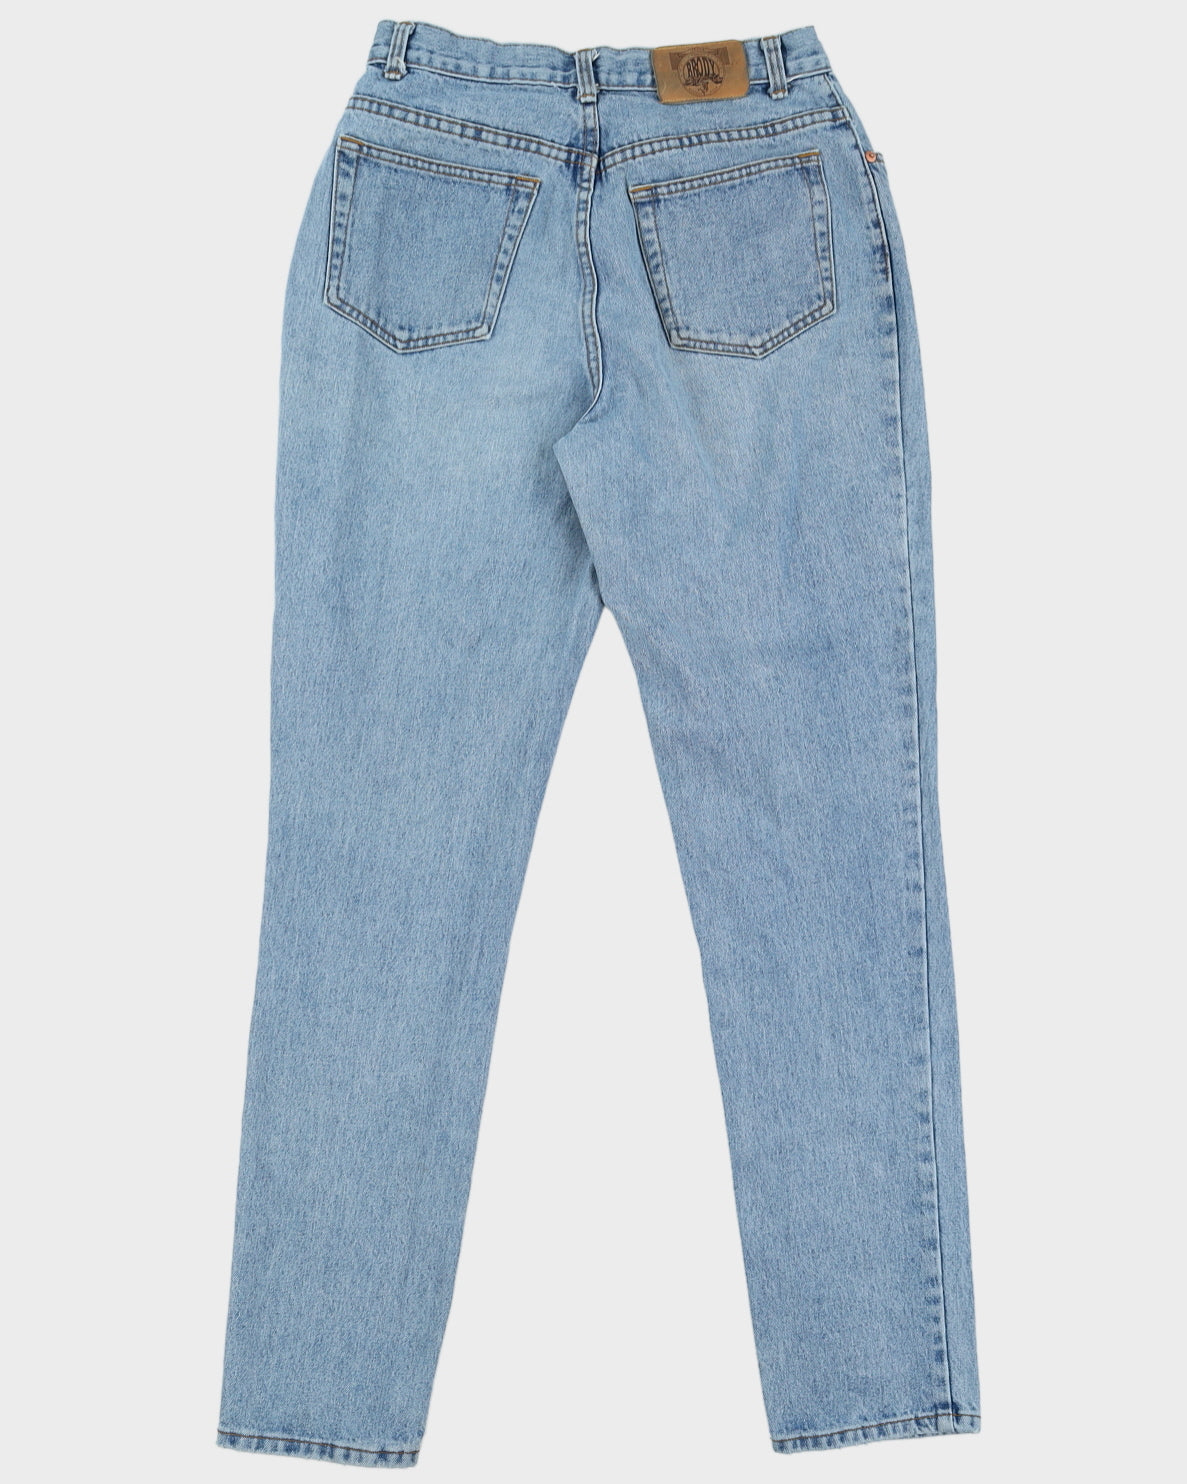 Vintage 90s Brody Light Wash Denim Jeans - W30